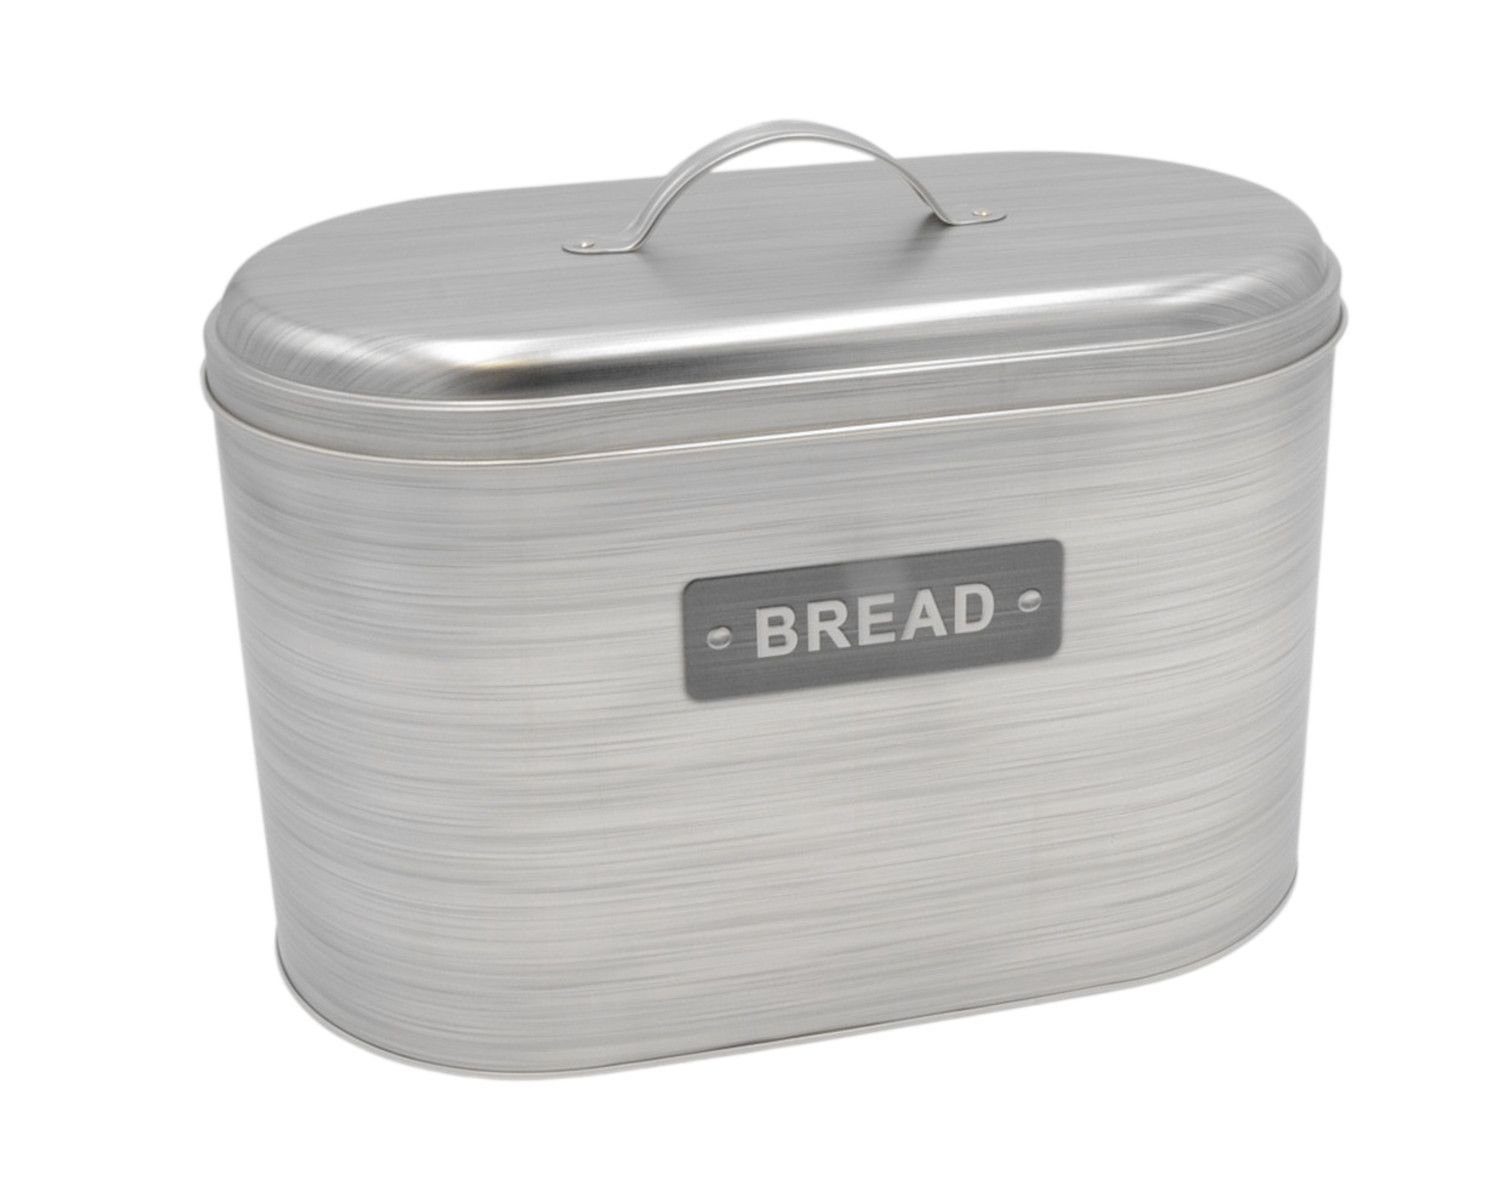 BURI Vorratsdose Metall Brotdose Brotkasten Brotbehälter, Metall Bread mit Brotbox Griff